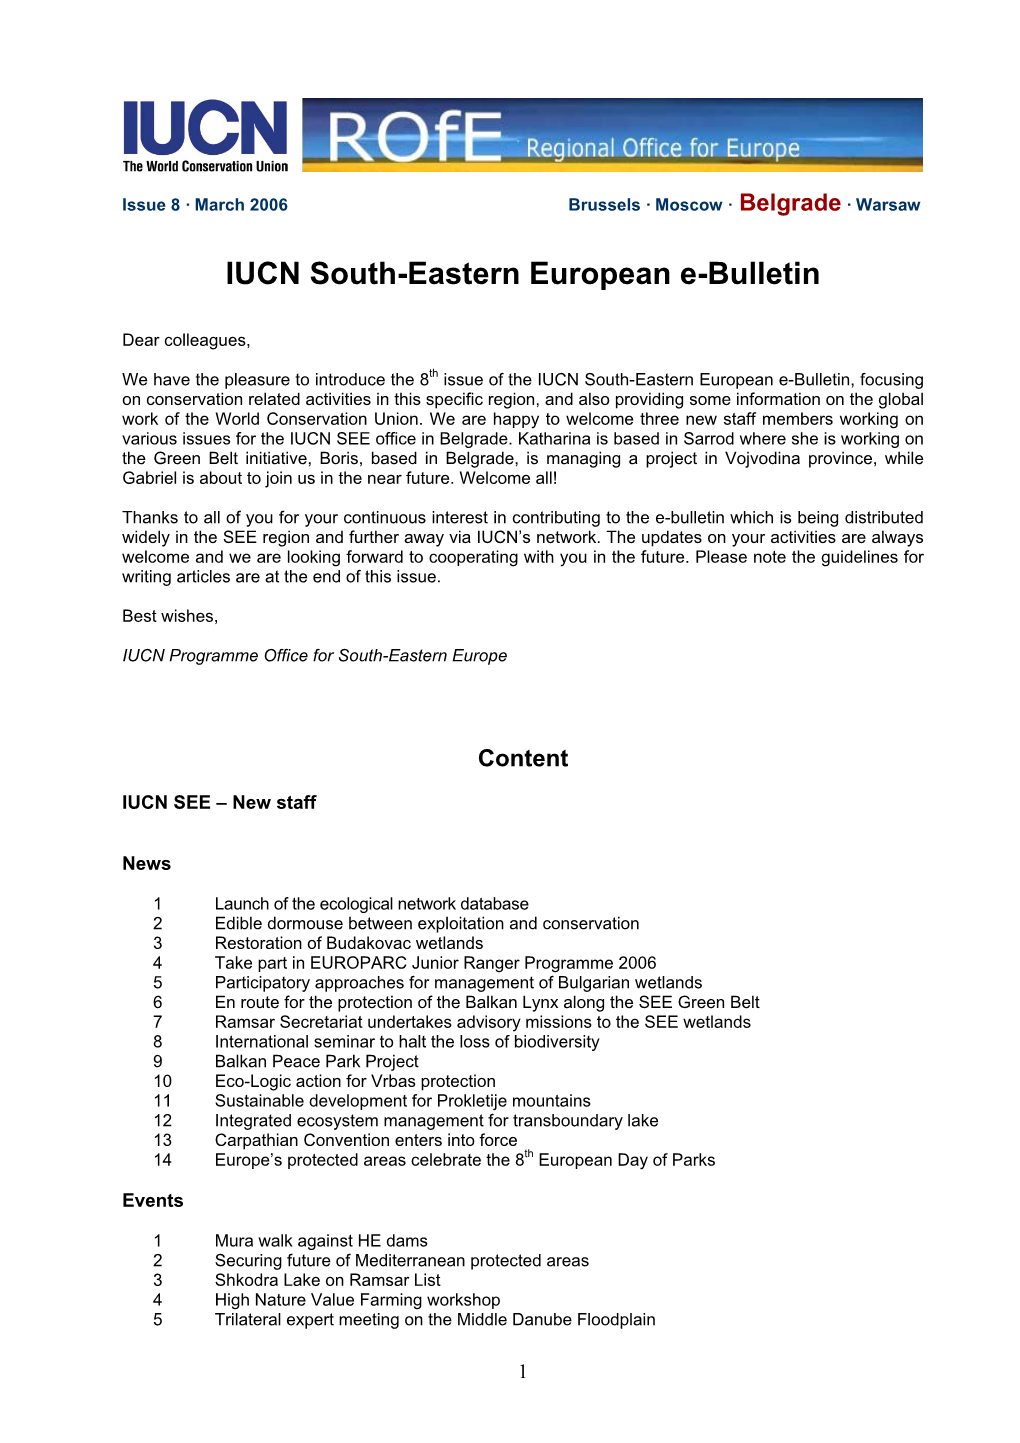 IUCN South-Eastern European E-Bulletin 8